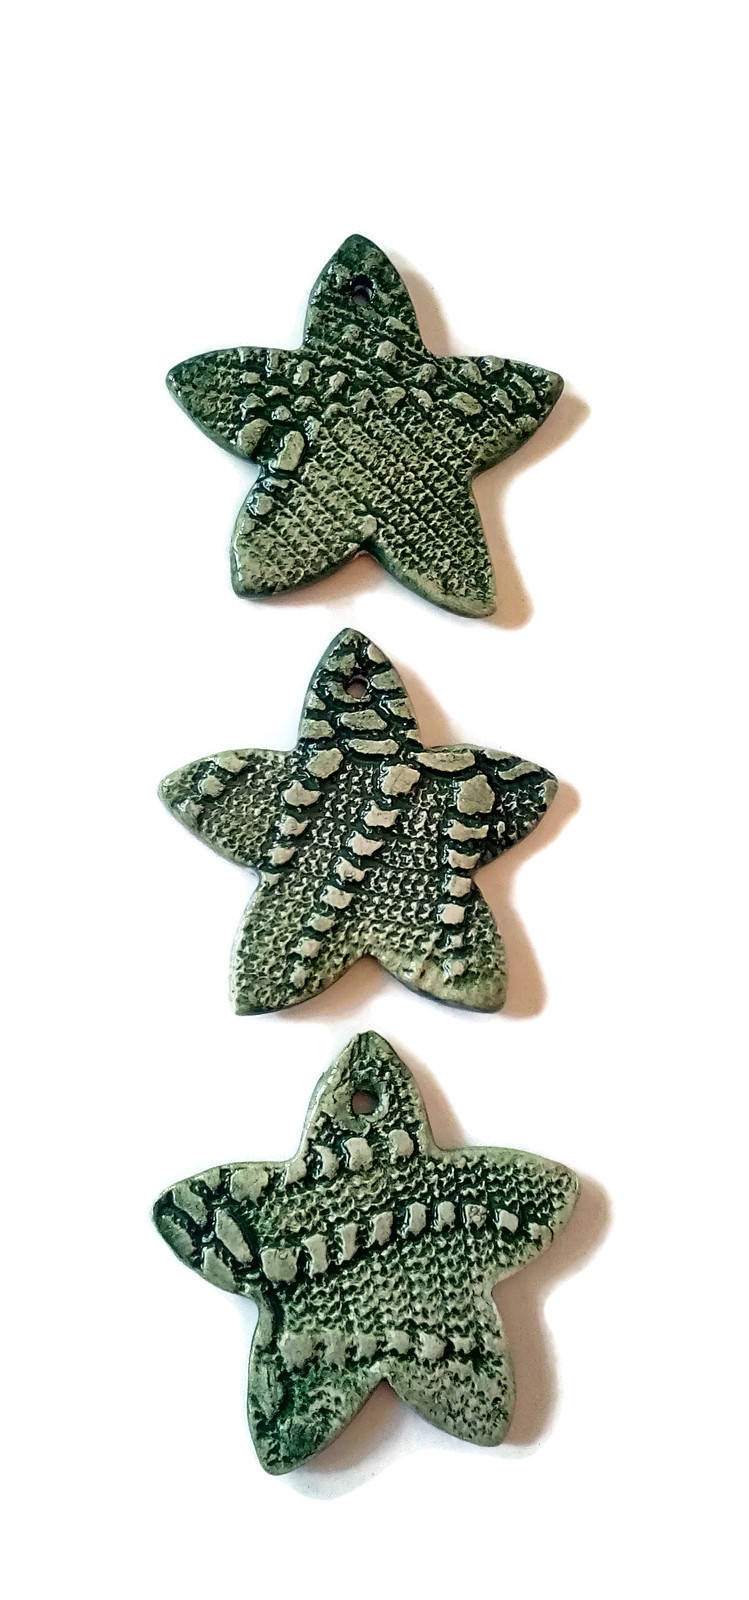 3Pcs Handmade Ceramic Green Star Shaped Ornament, Christmas Tree Ornaments, Clay Wall Hanging , Antique Look Designer Wall Art, Lace Texture - Ceramica Ana Rafael